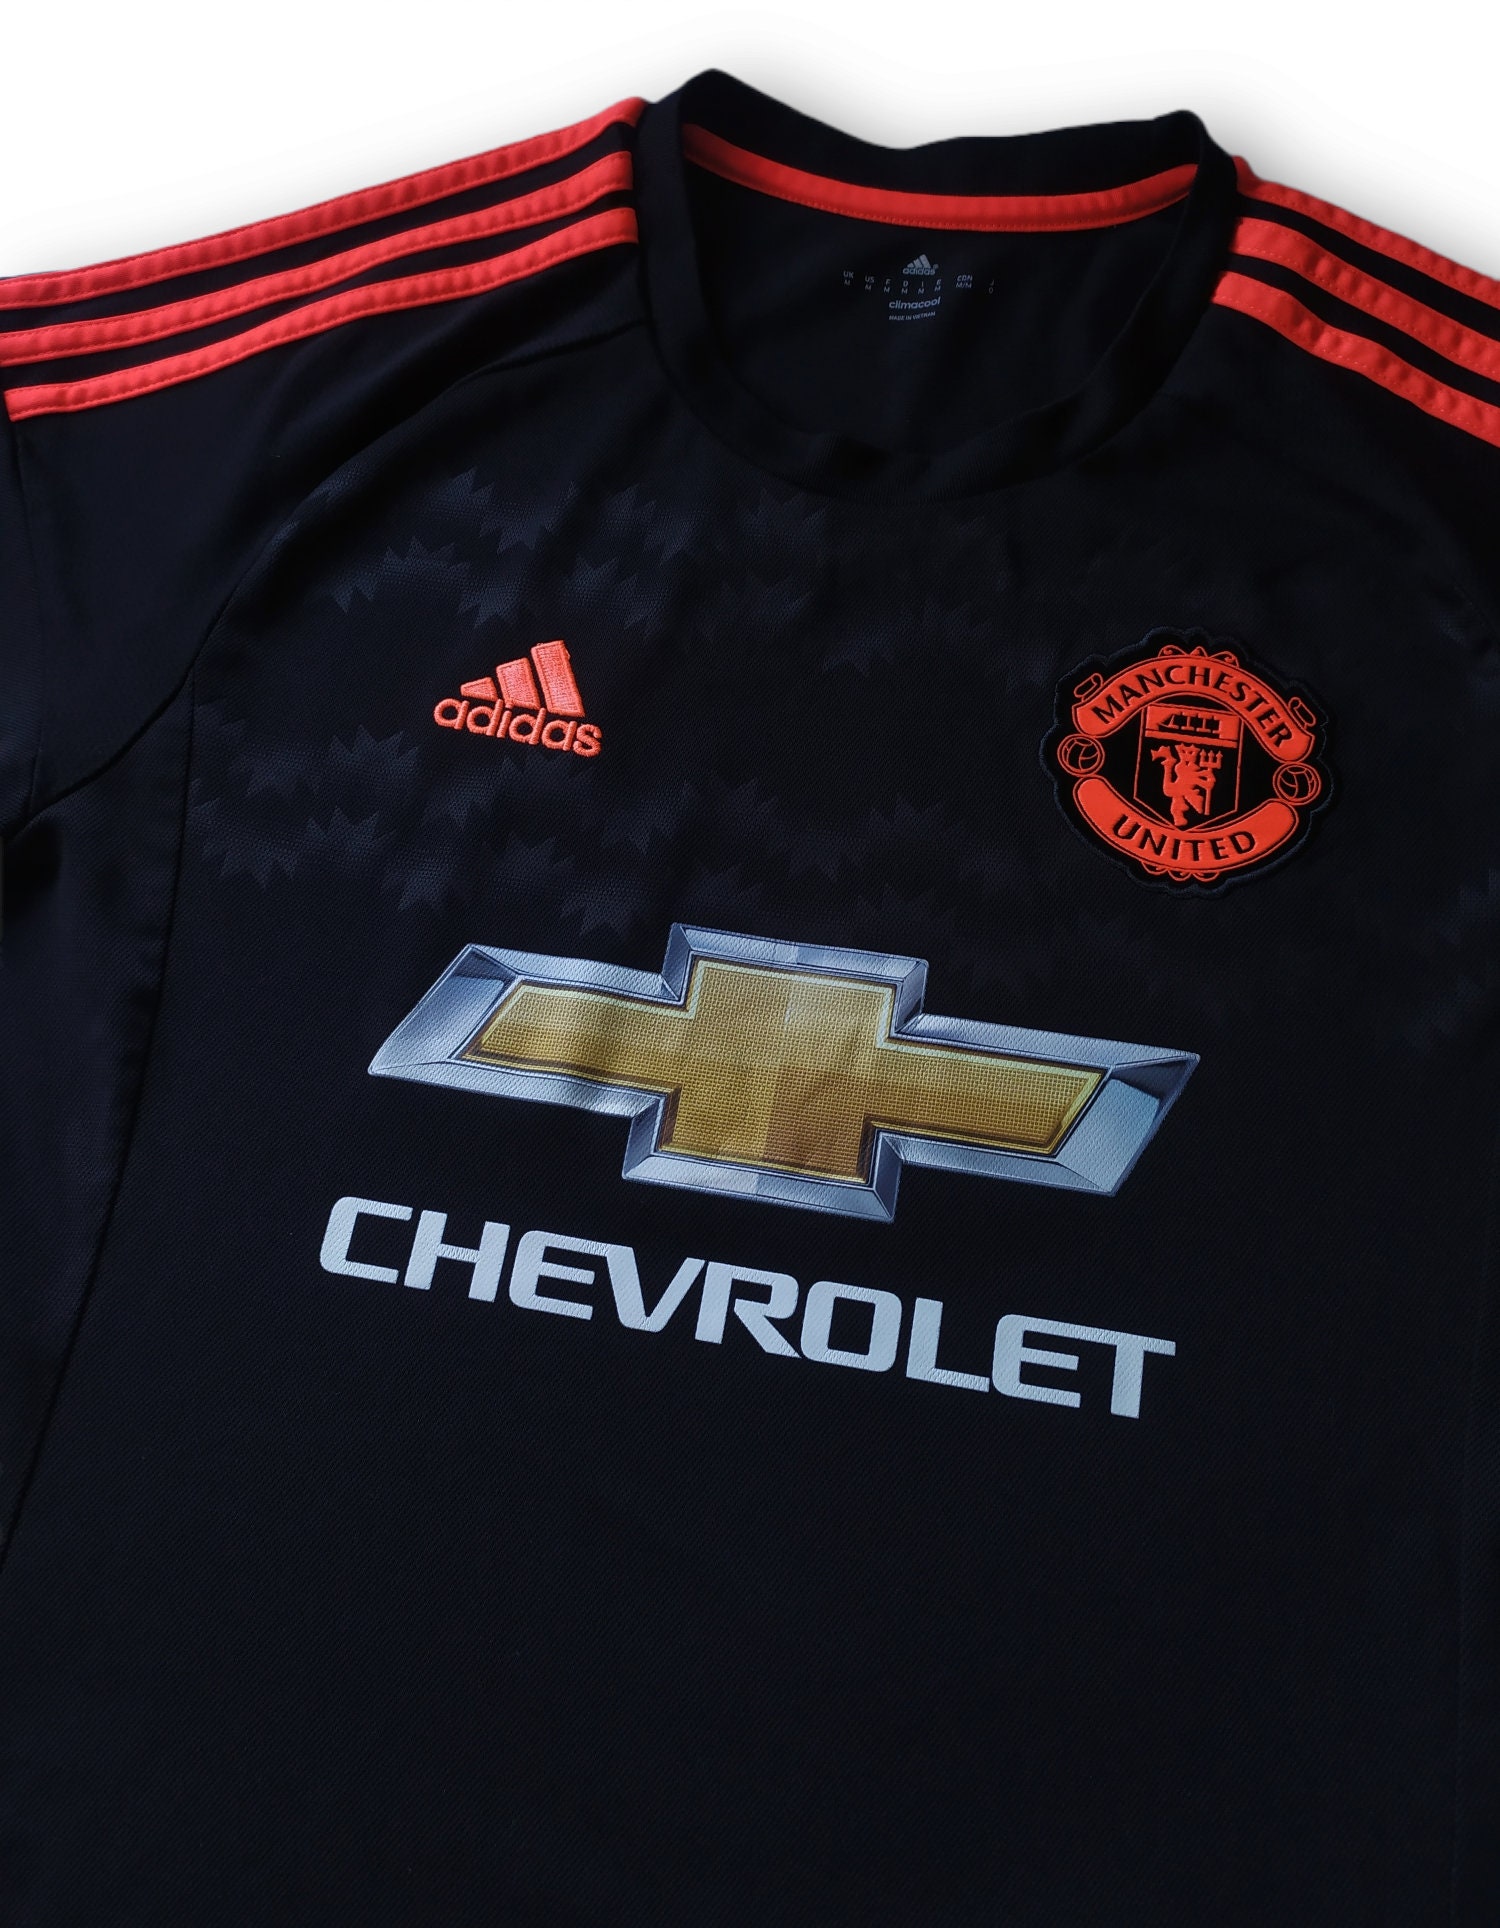 Adidas Manchester United 2015/16 Chevrolet AC1445 jersey | Etsy